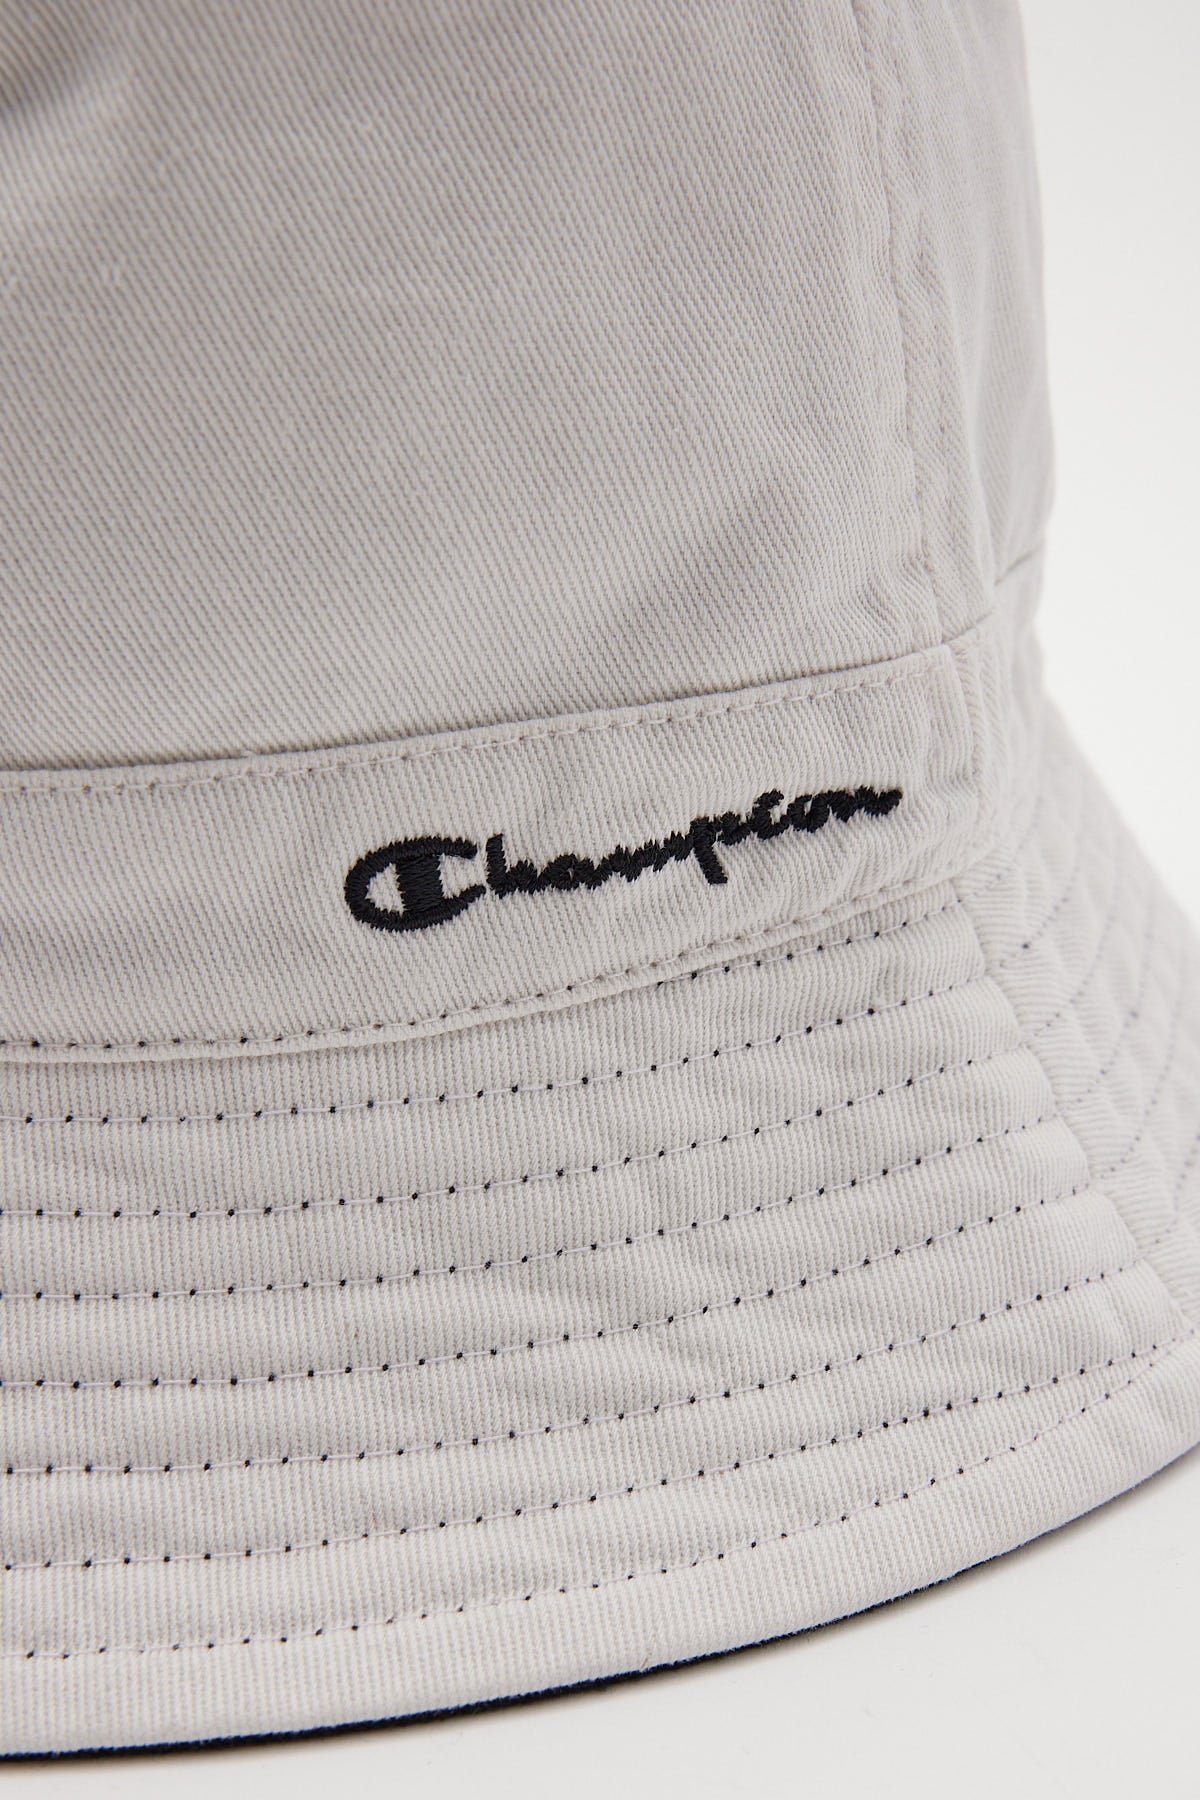 Champion Reversible Bucket Hat Black/White